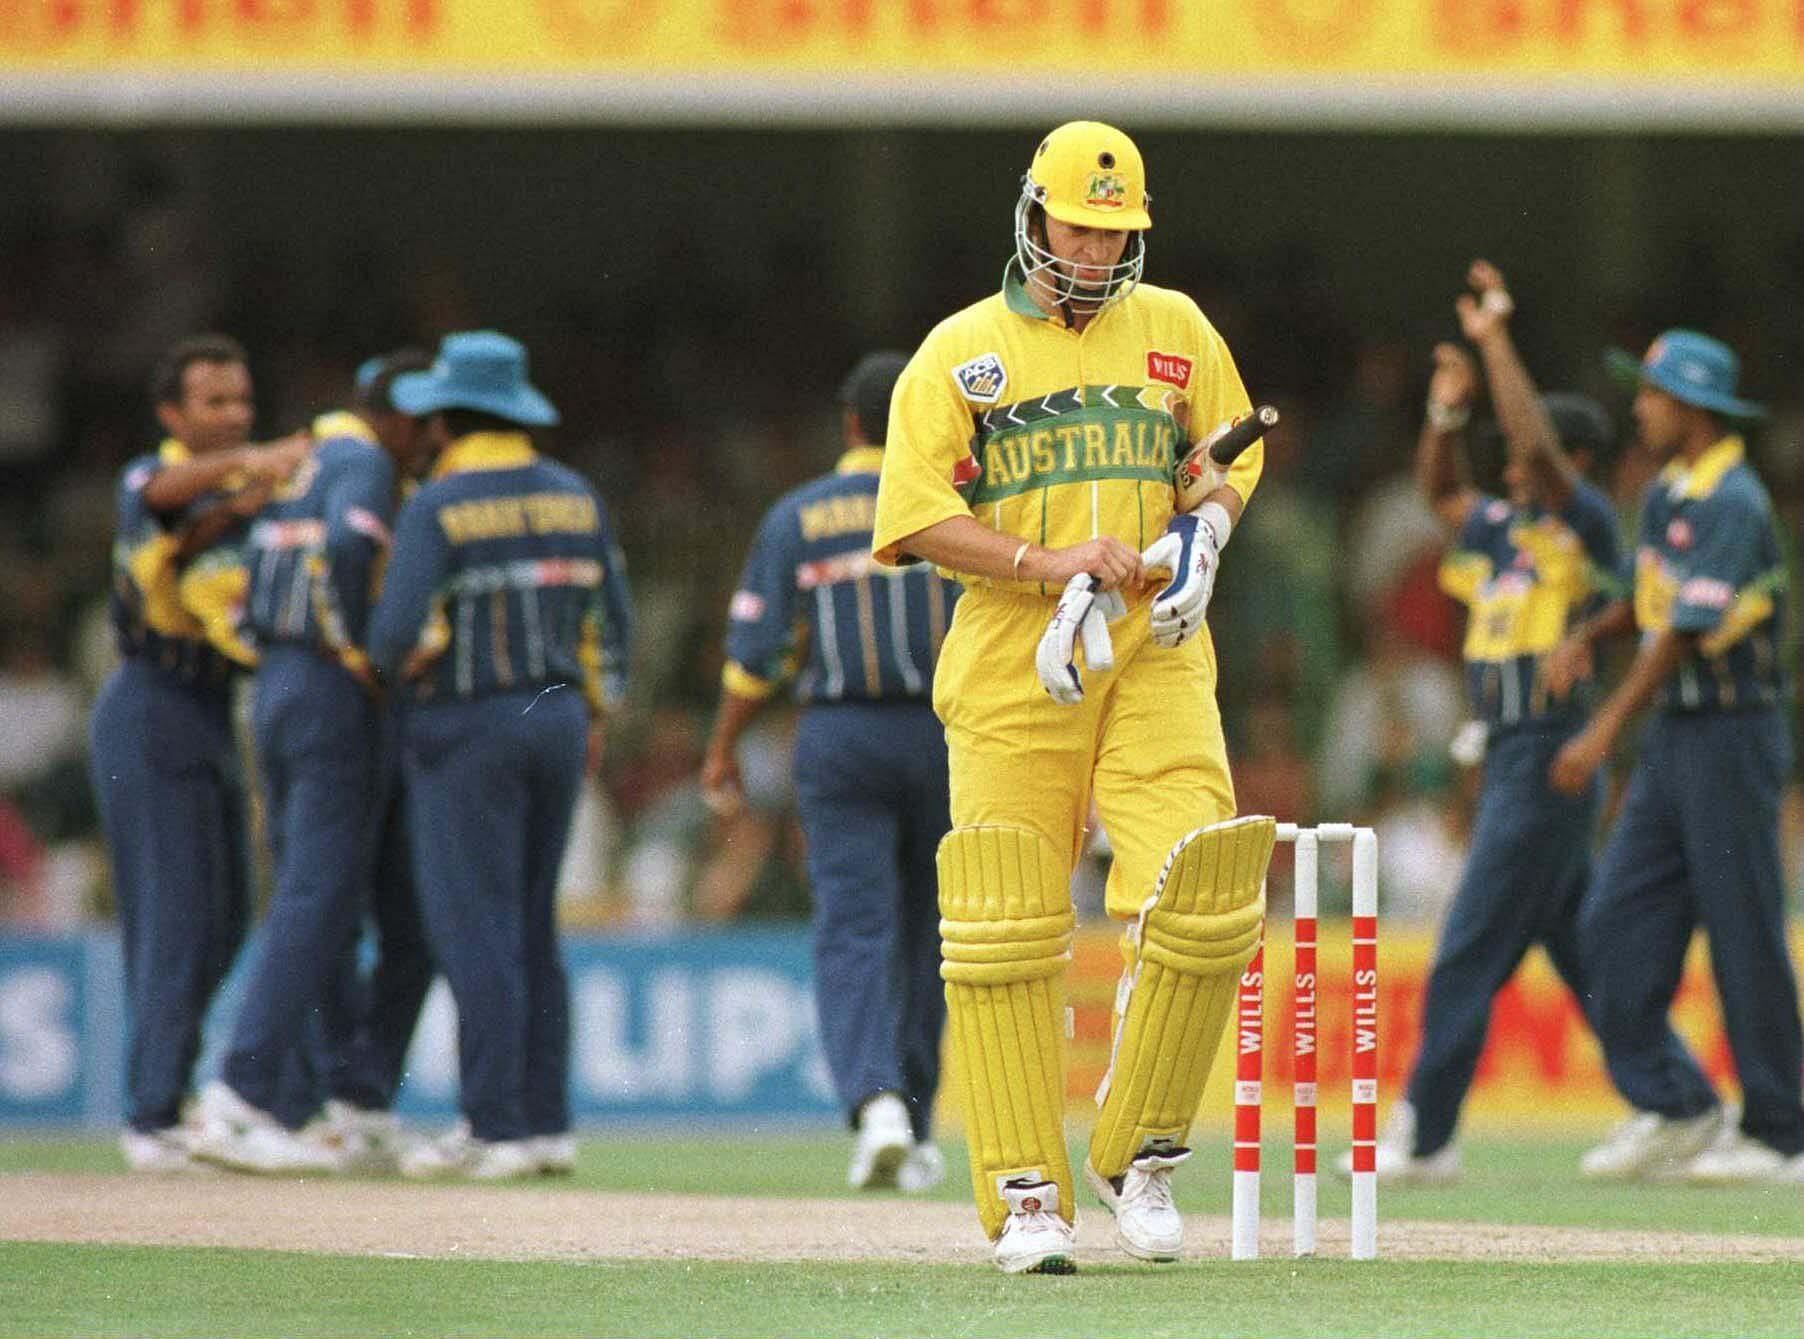 Sri Lanka were excellent against Australia in the 1996 Final